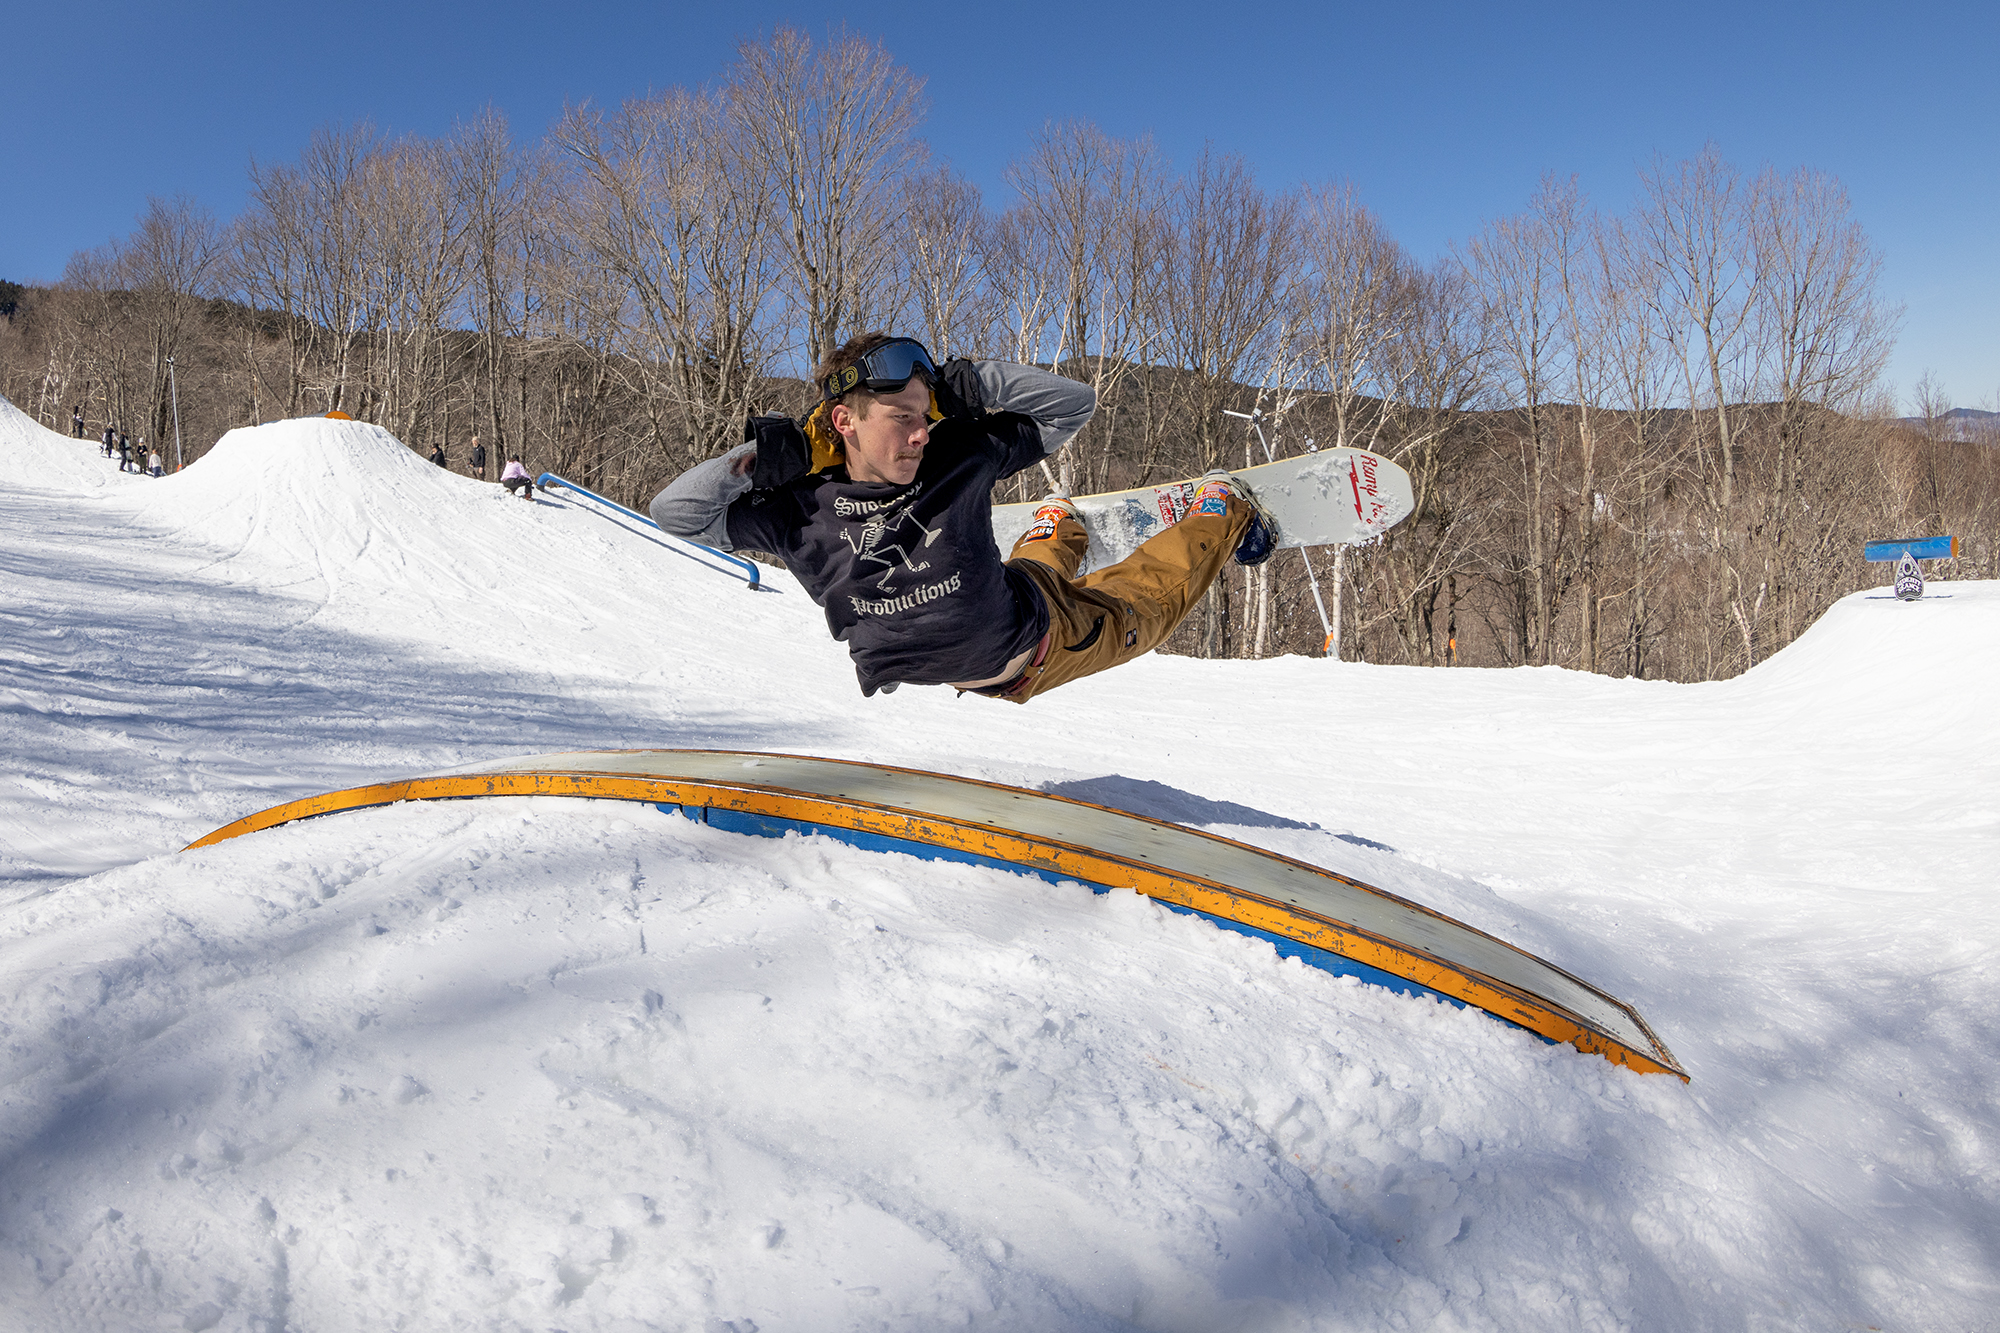 Timmy Sullivan snowboarding